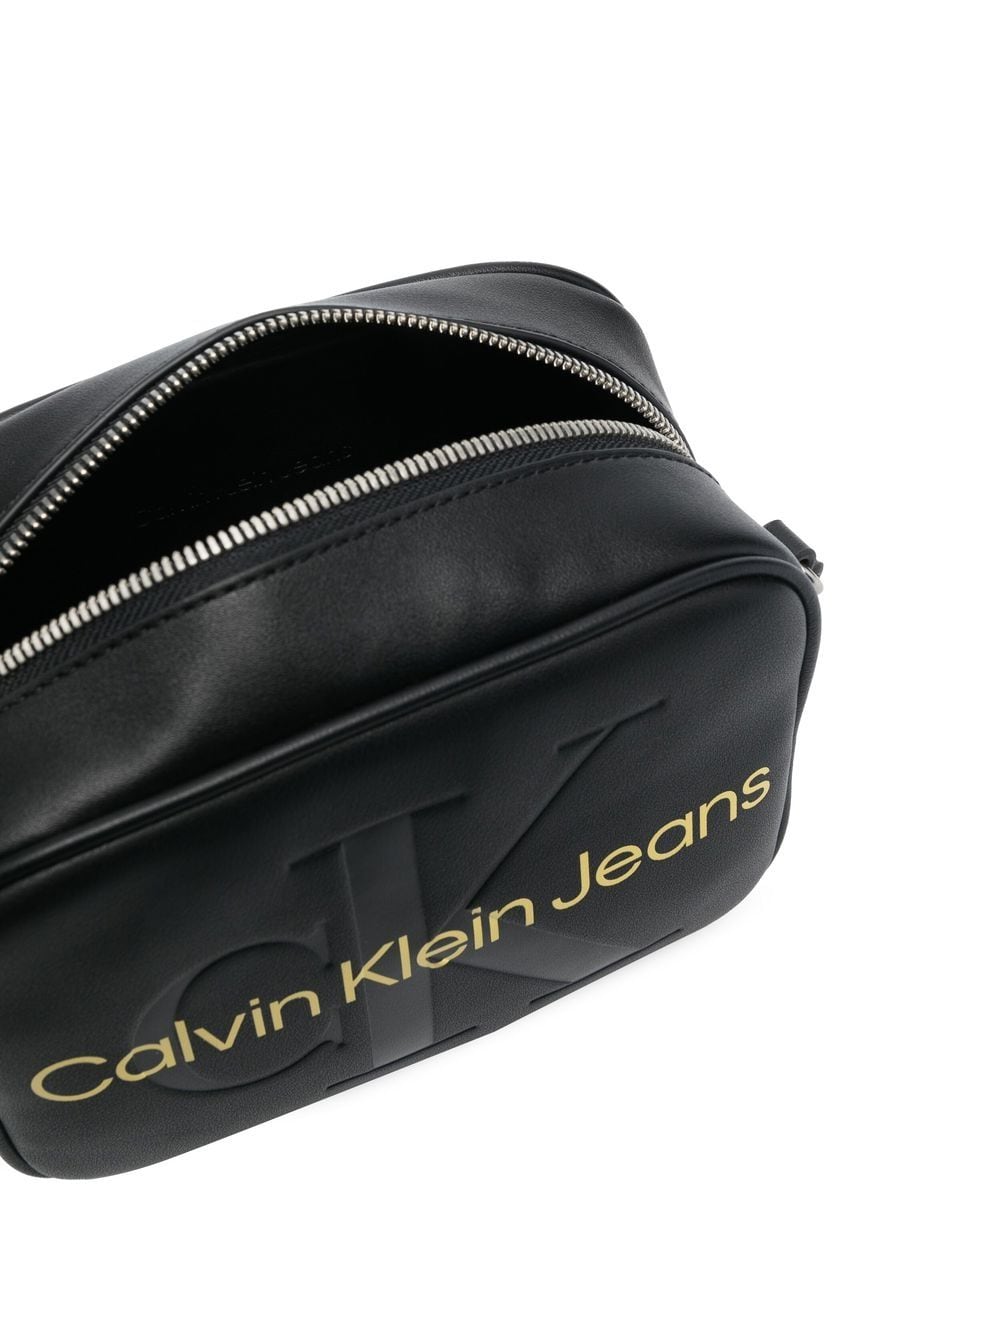 Calvin Klein Jeans - Cross body bag